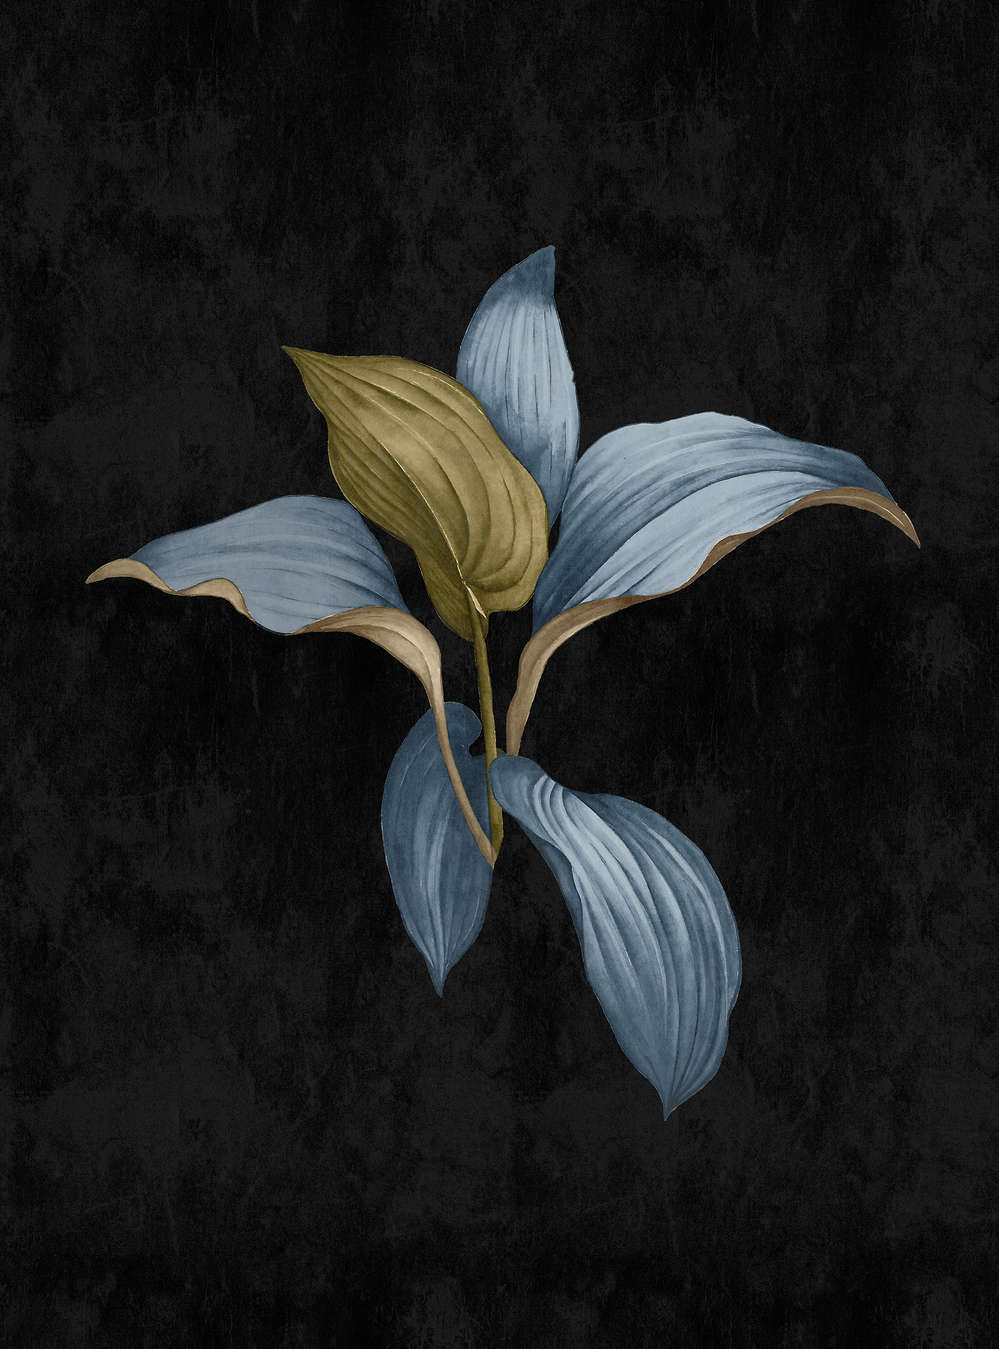             Fiji 3 – Dunkle Fototapete Botanical Design in Blau & Grün
        